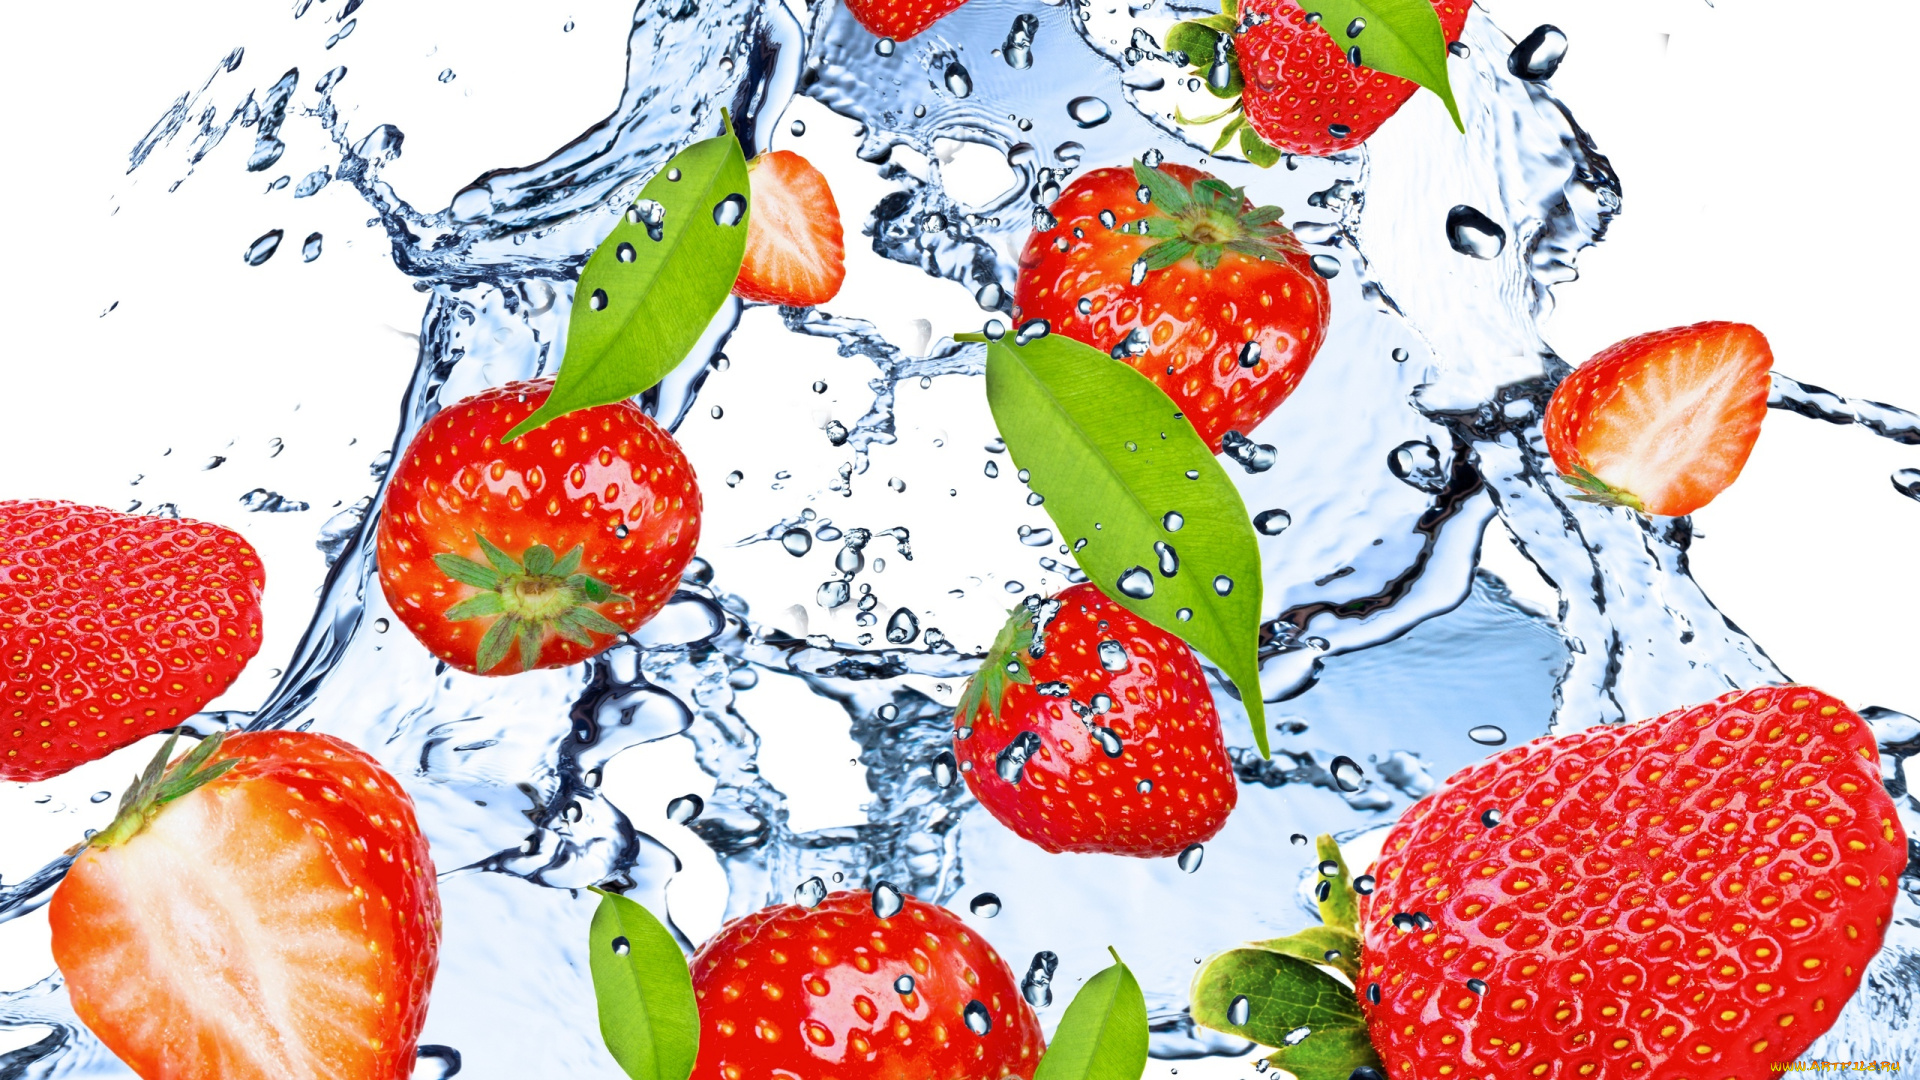 еда, клубника, , земляника, strawberry, вода, капли, брызги, свежесть, красная, ягода, berry, red, water, drops, spray